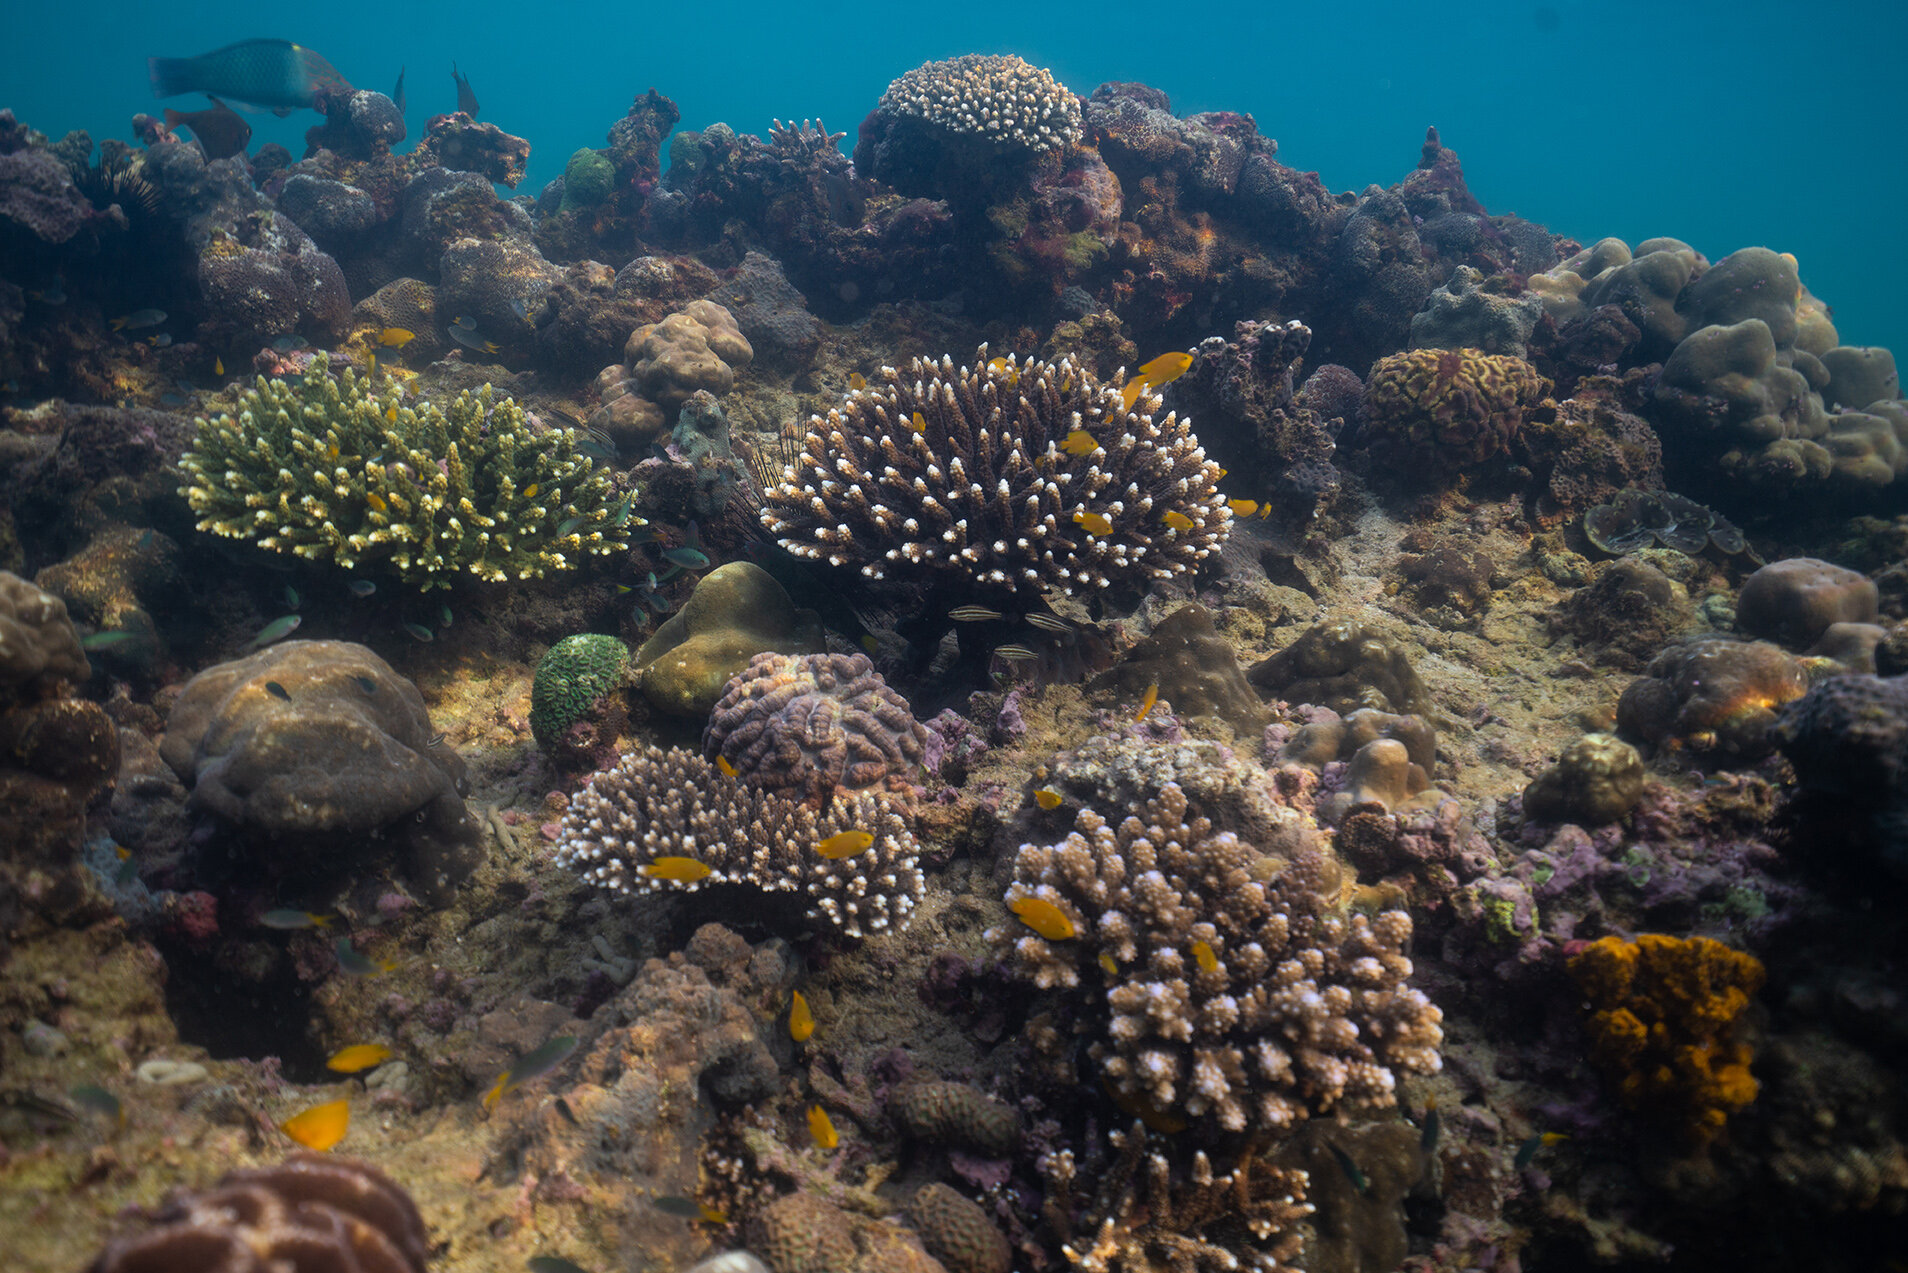  Feb 02, 2020 - Kyun Pila, Myanmar. Underwater landscape of live coral. © Nicolas Axelrod / Ruom 